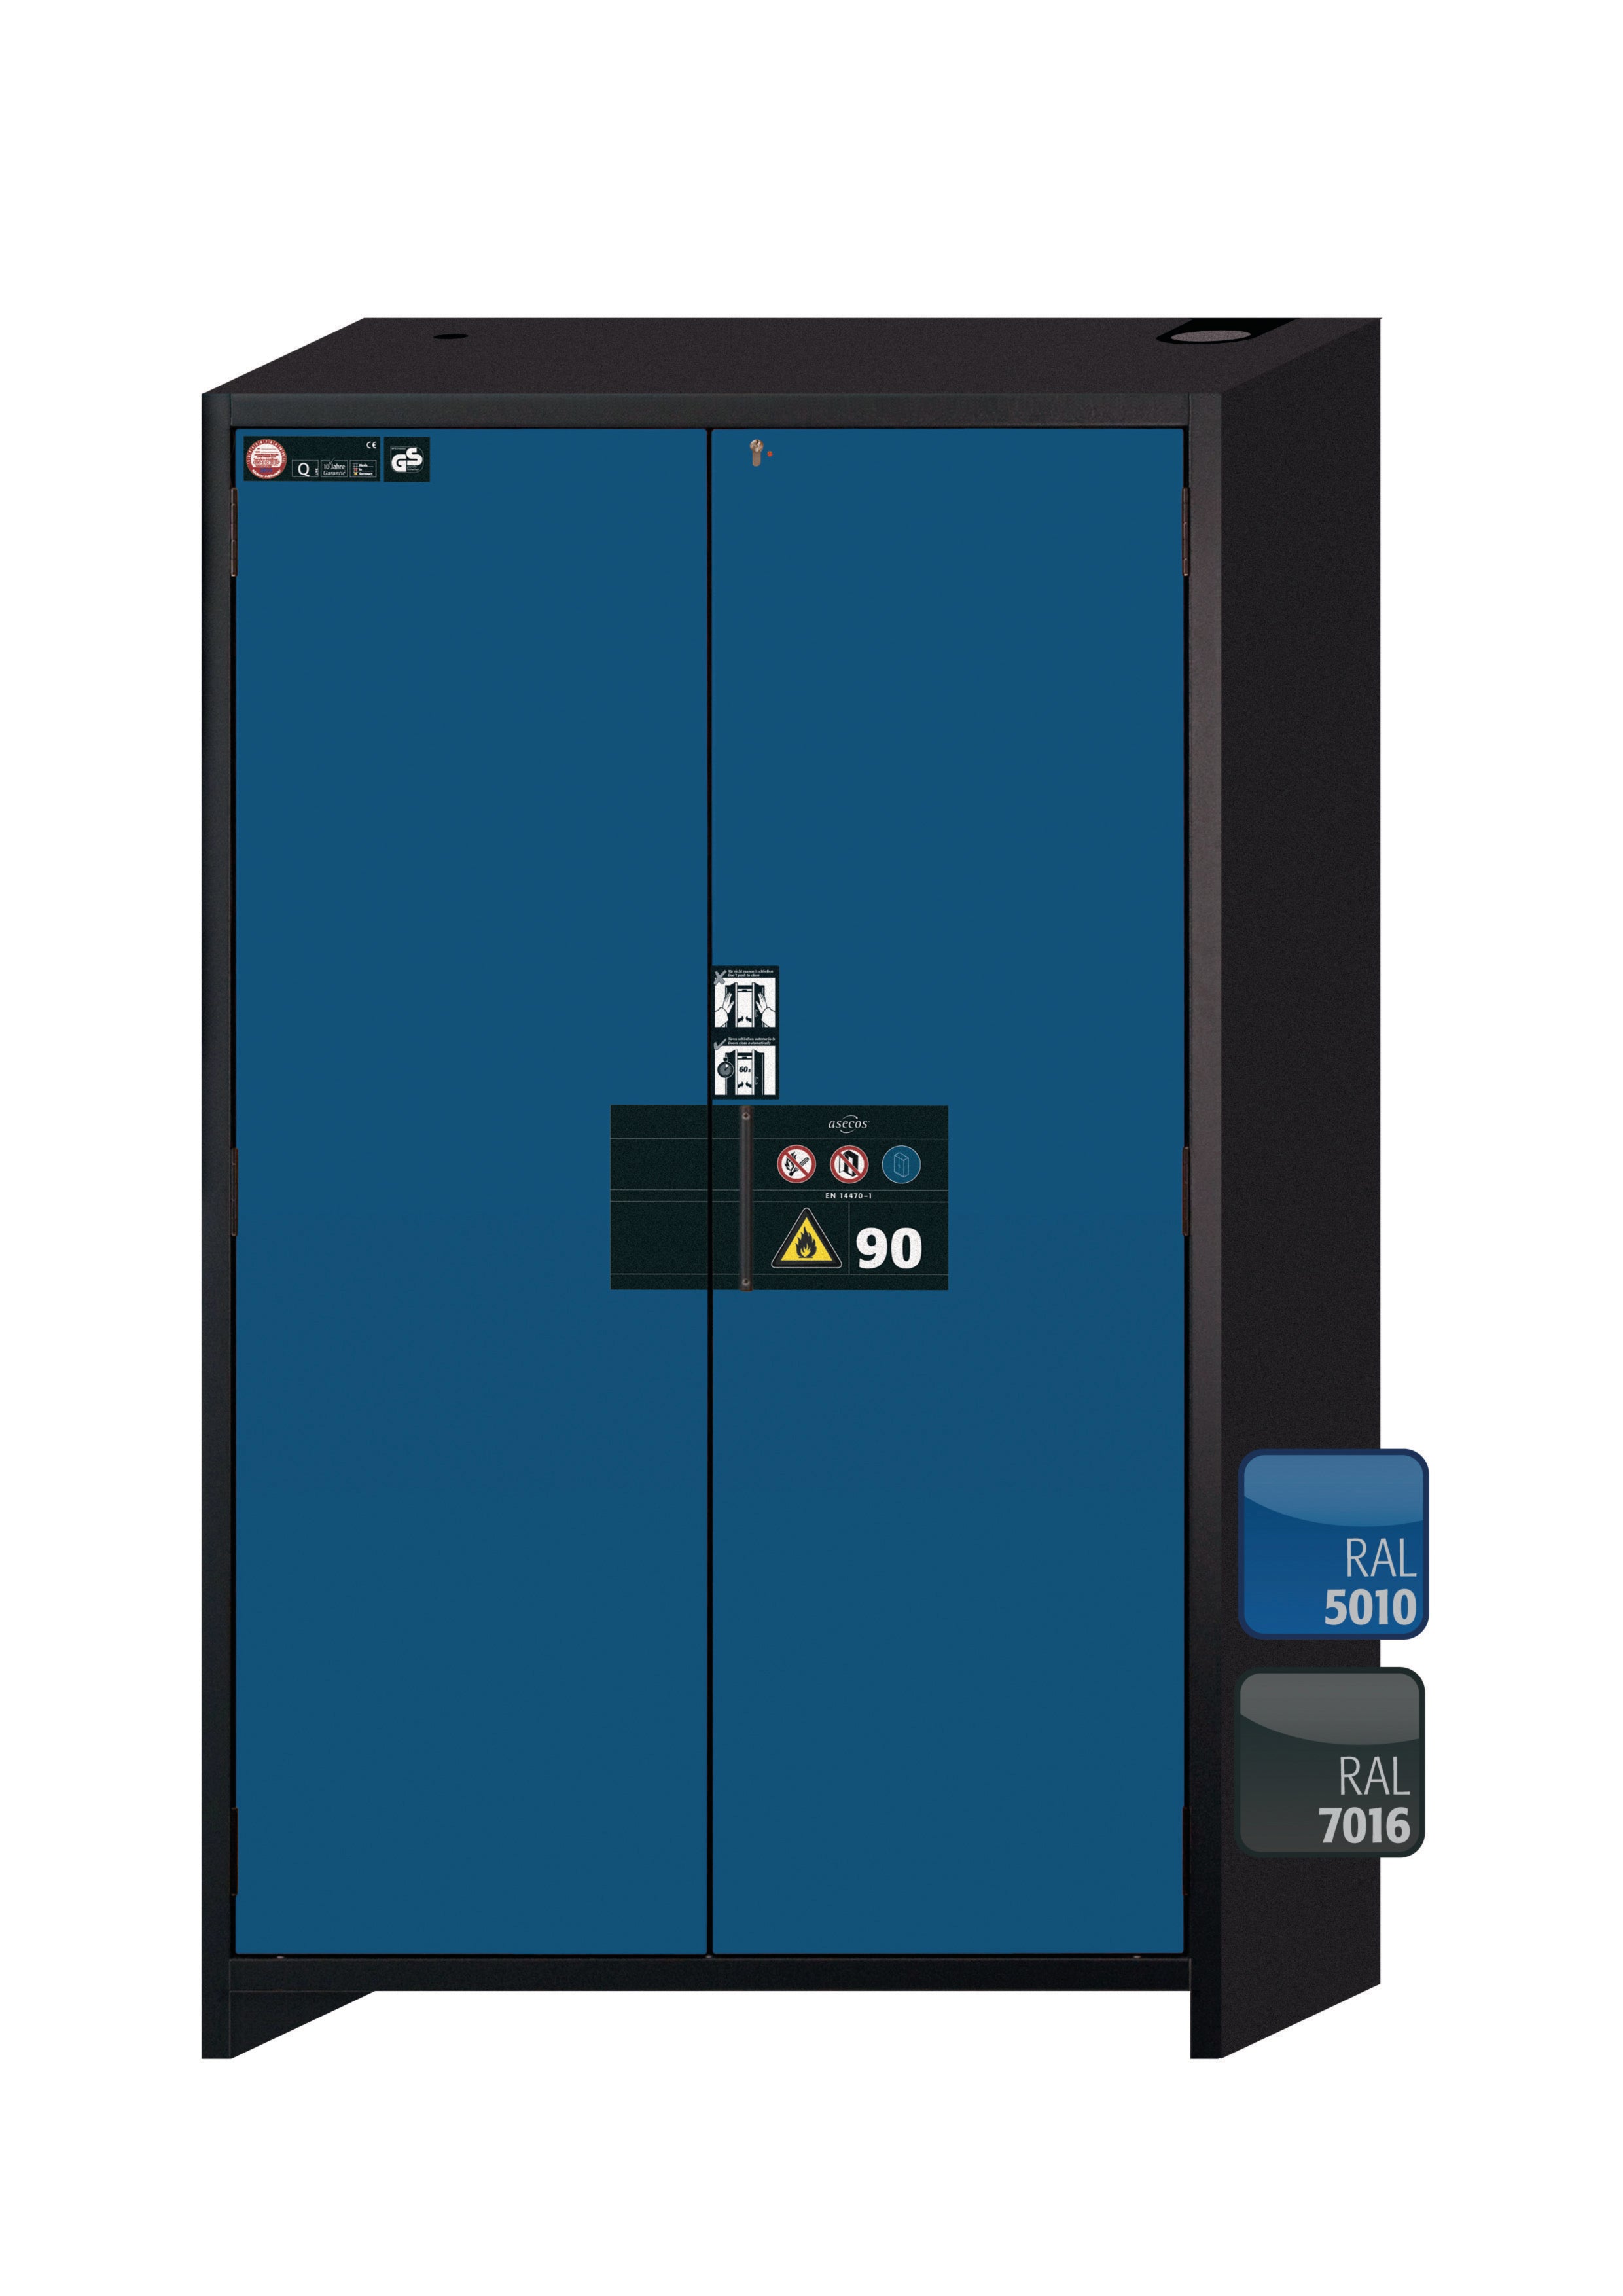 Type 90 safety storage cabinet Q-PEGASUS-90 model Q90.195.120.WDAC in gentian blue RAL 5010 with 2x tray shelf (standard) (polypropylene),